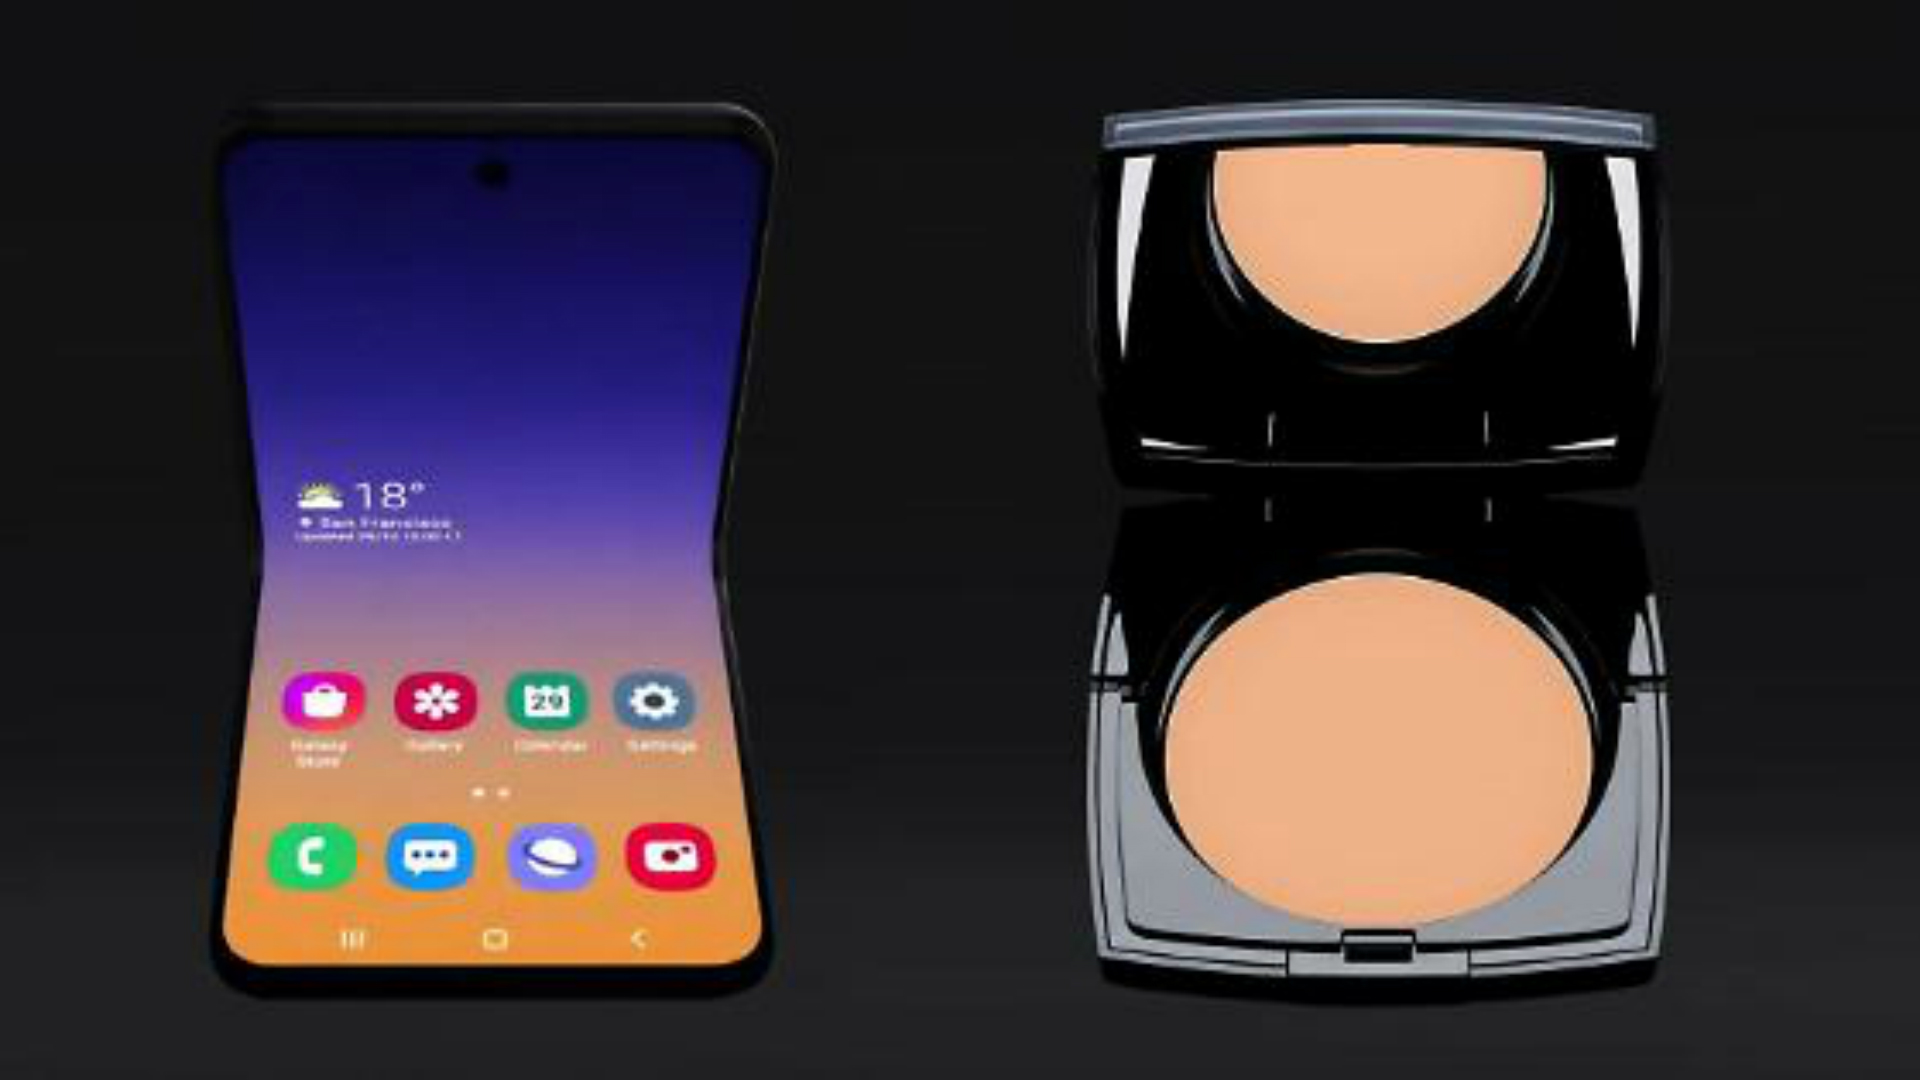 Samsung Bloom Lancome Compact comparison